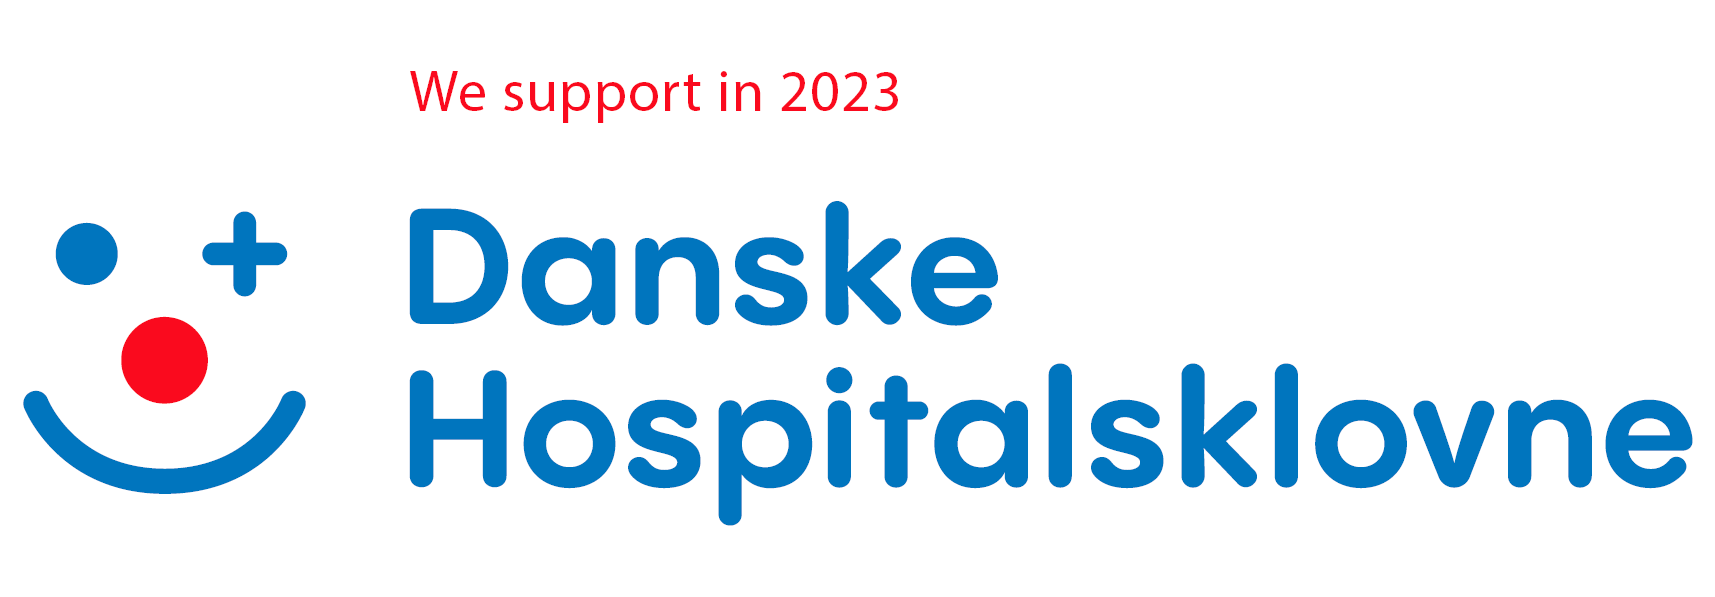 We support Hospitalsklovne in 2023